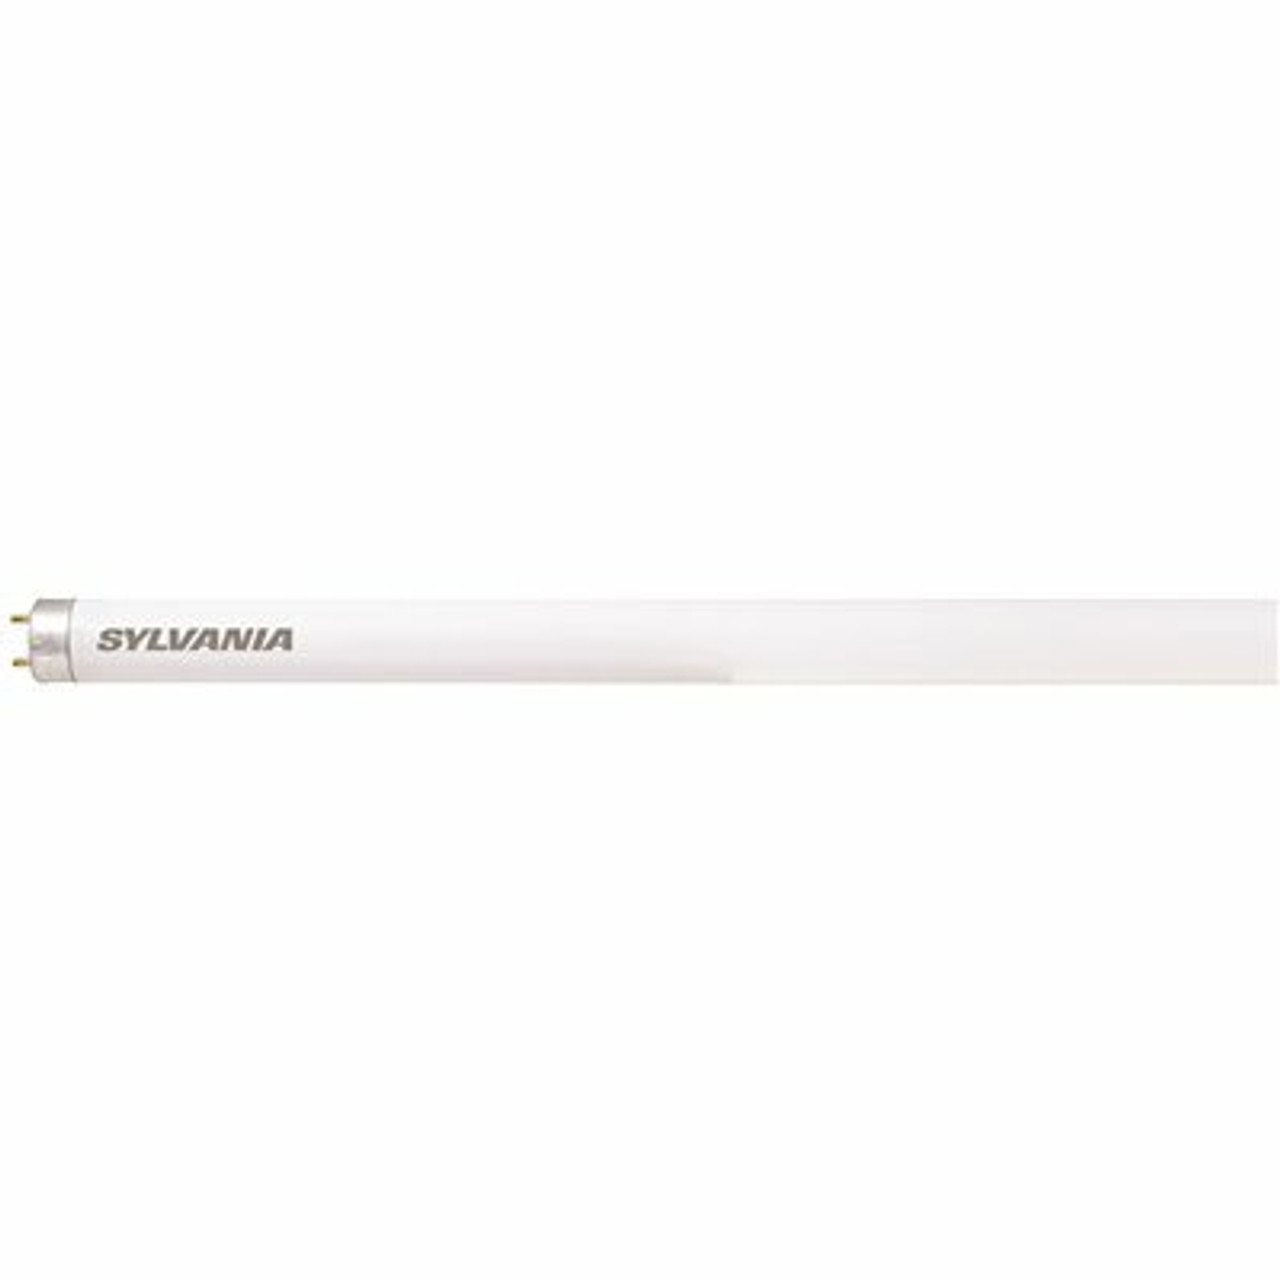 Sylvania 70-Watt Equivalent T8 Linear Fluorescent Light Bulb Cool White (25-Pack)